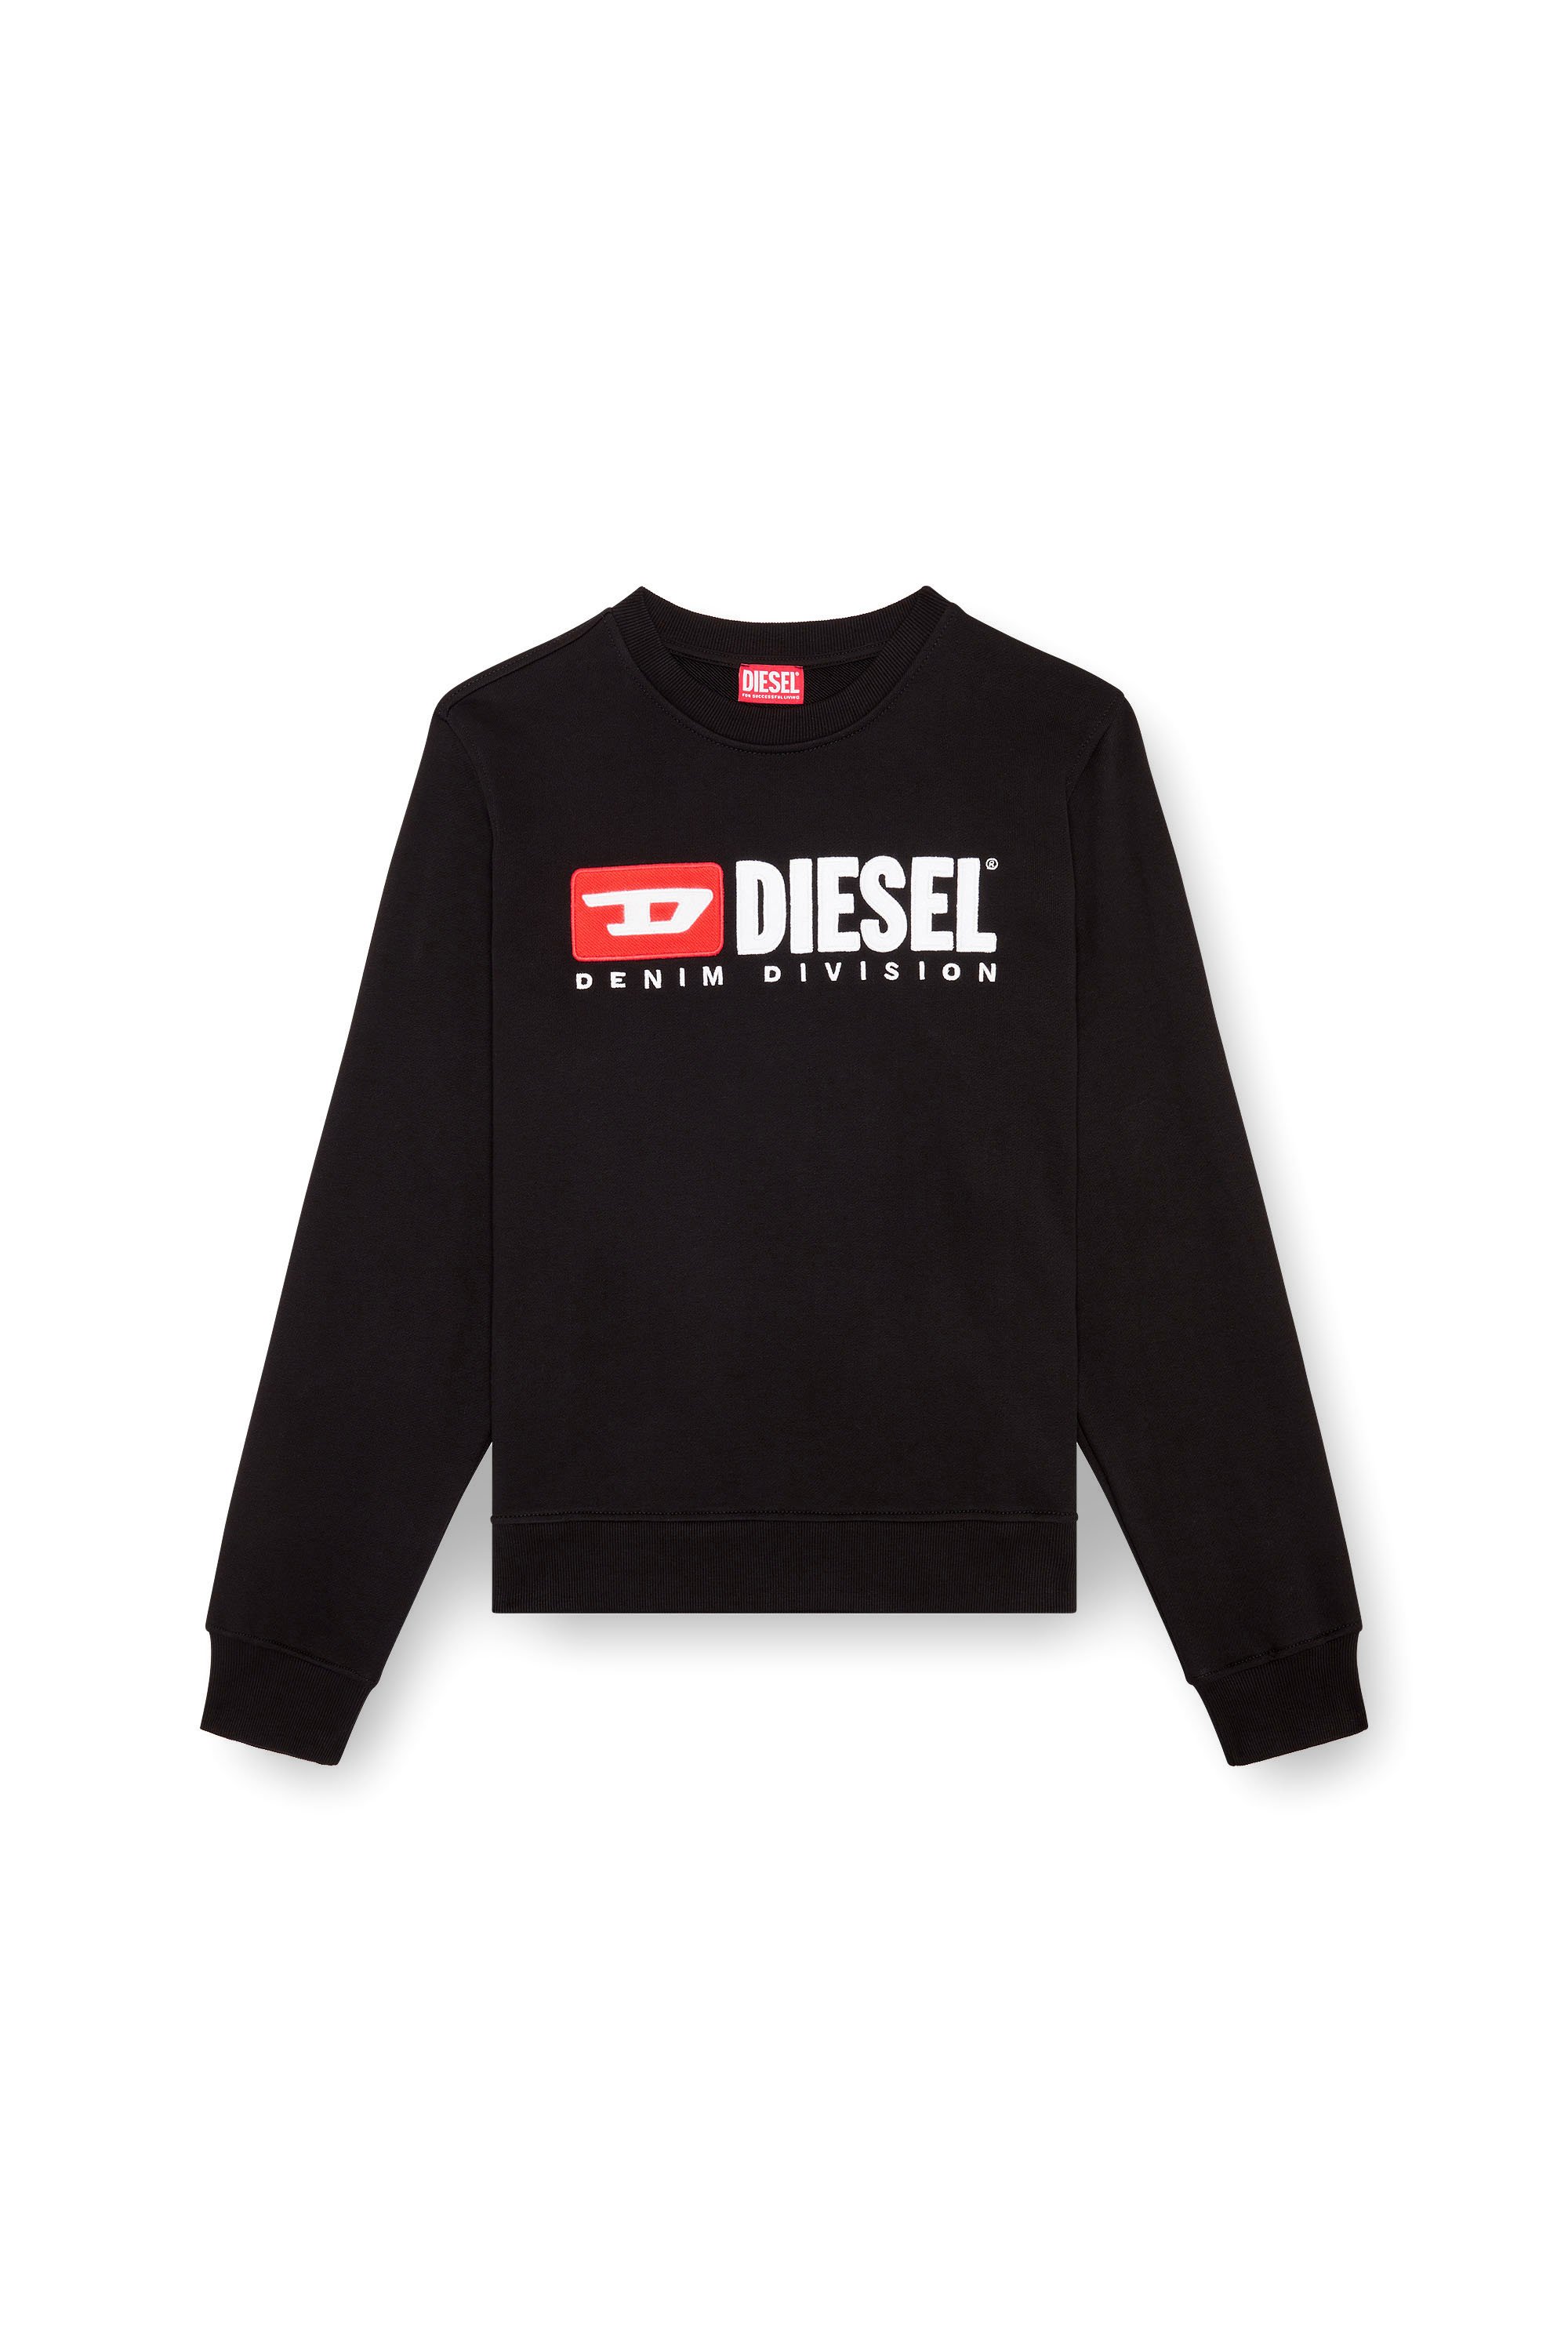 Diesel - S-BOXT-DIV, Man Sweatshirt with Denim Division logo in Black - Image 3